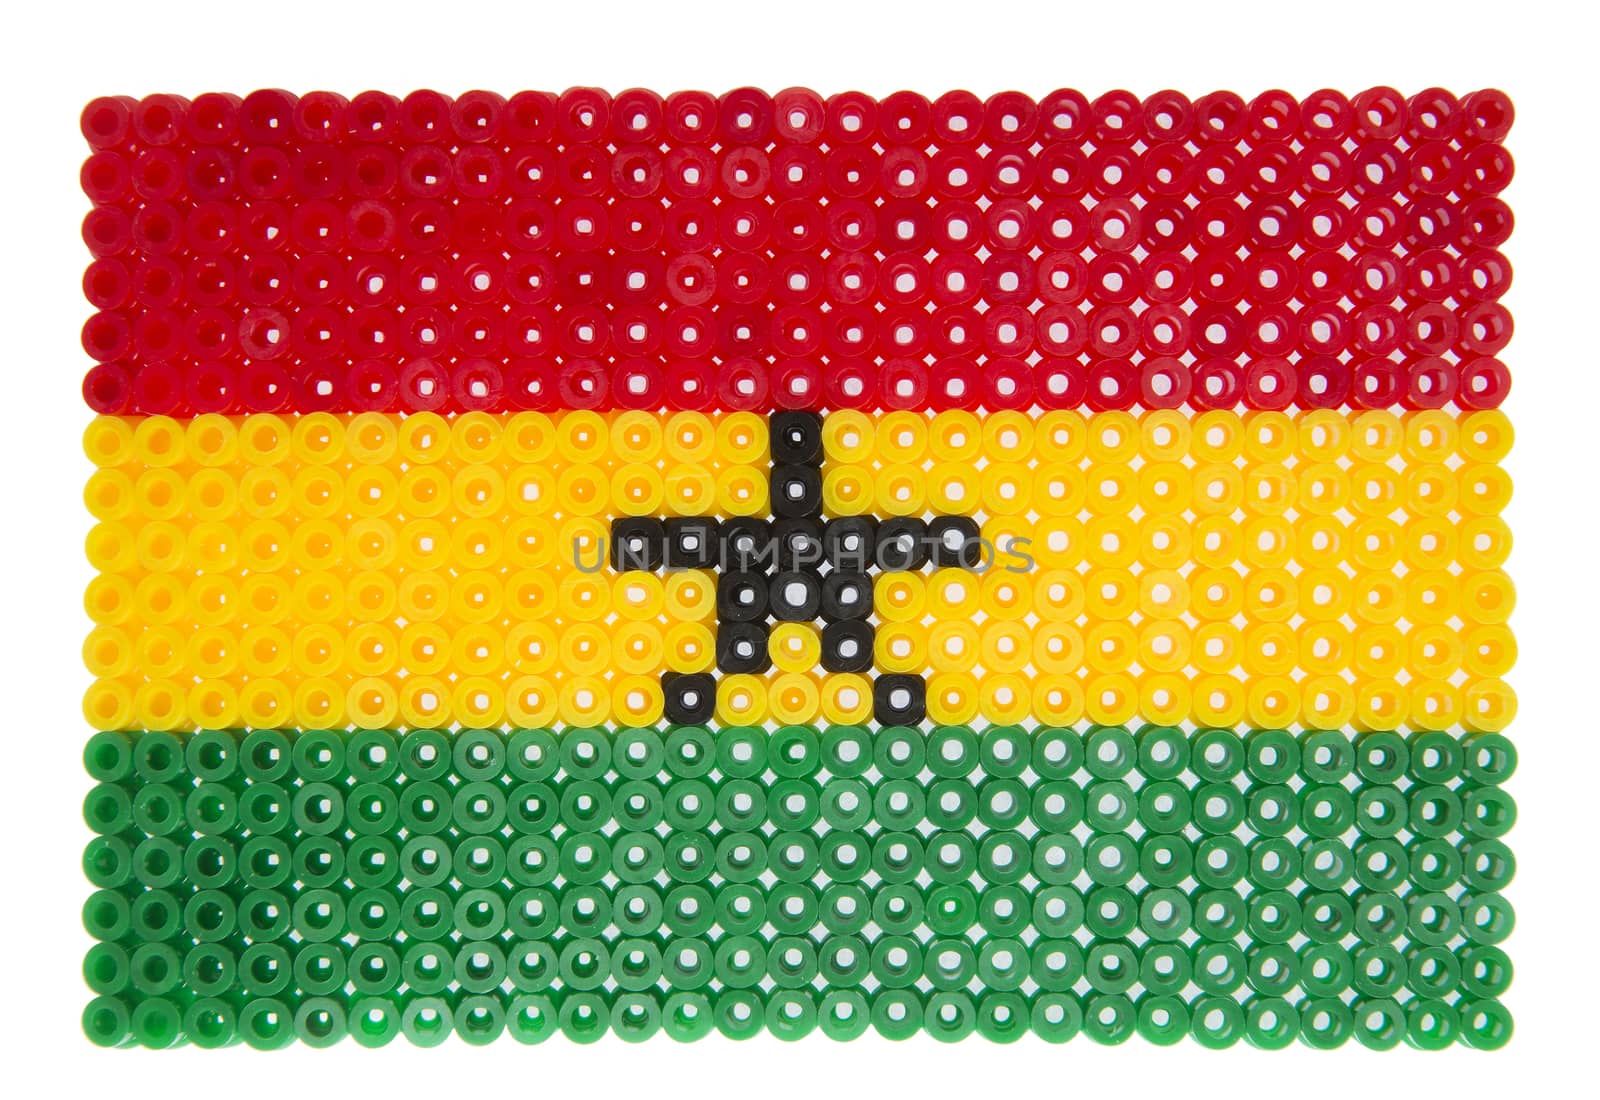 Flag of Ghana made of plastic pearls